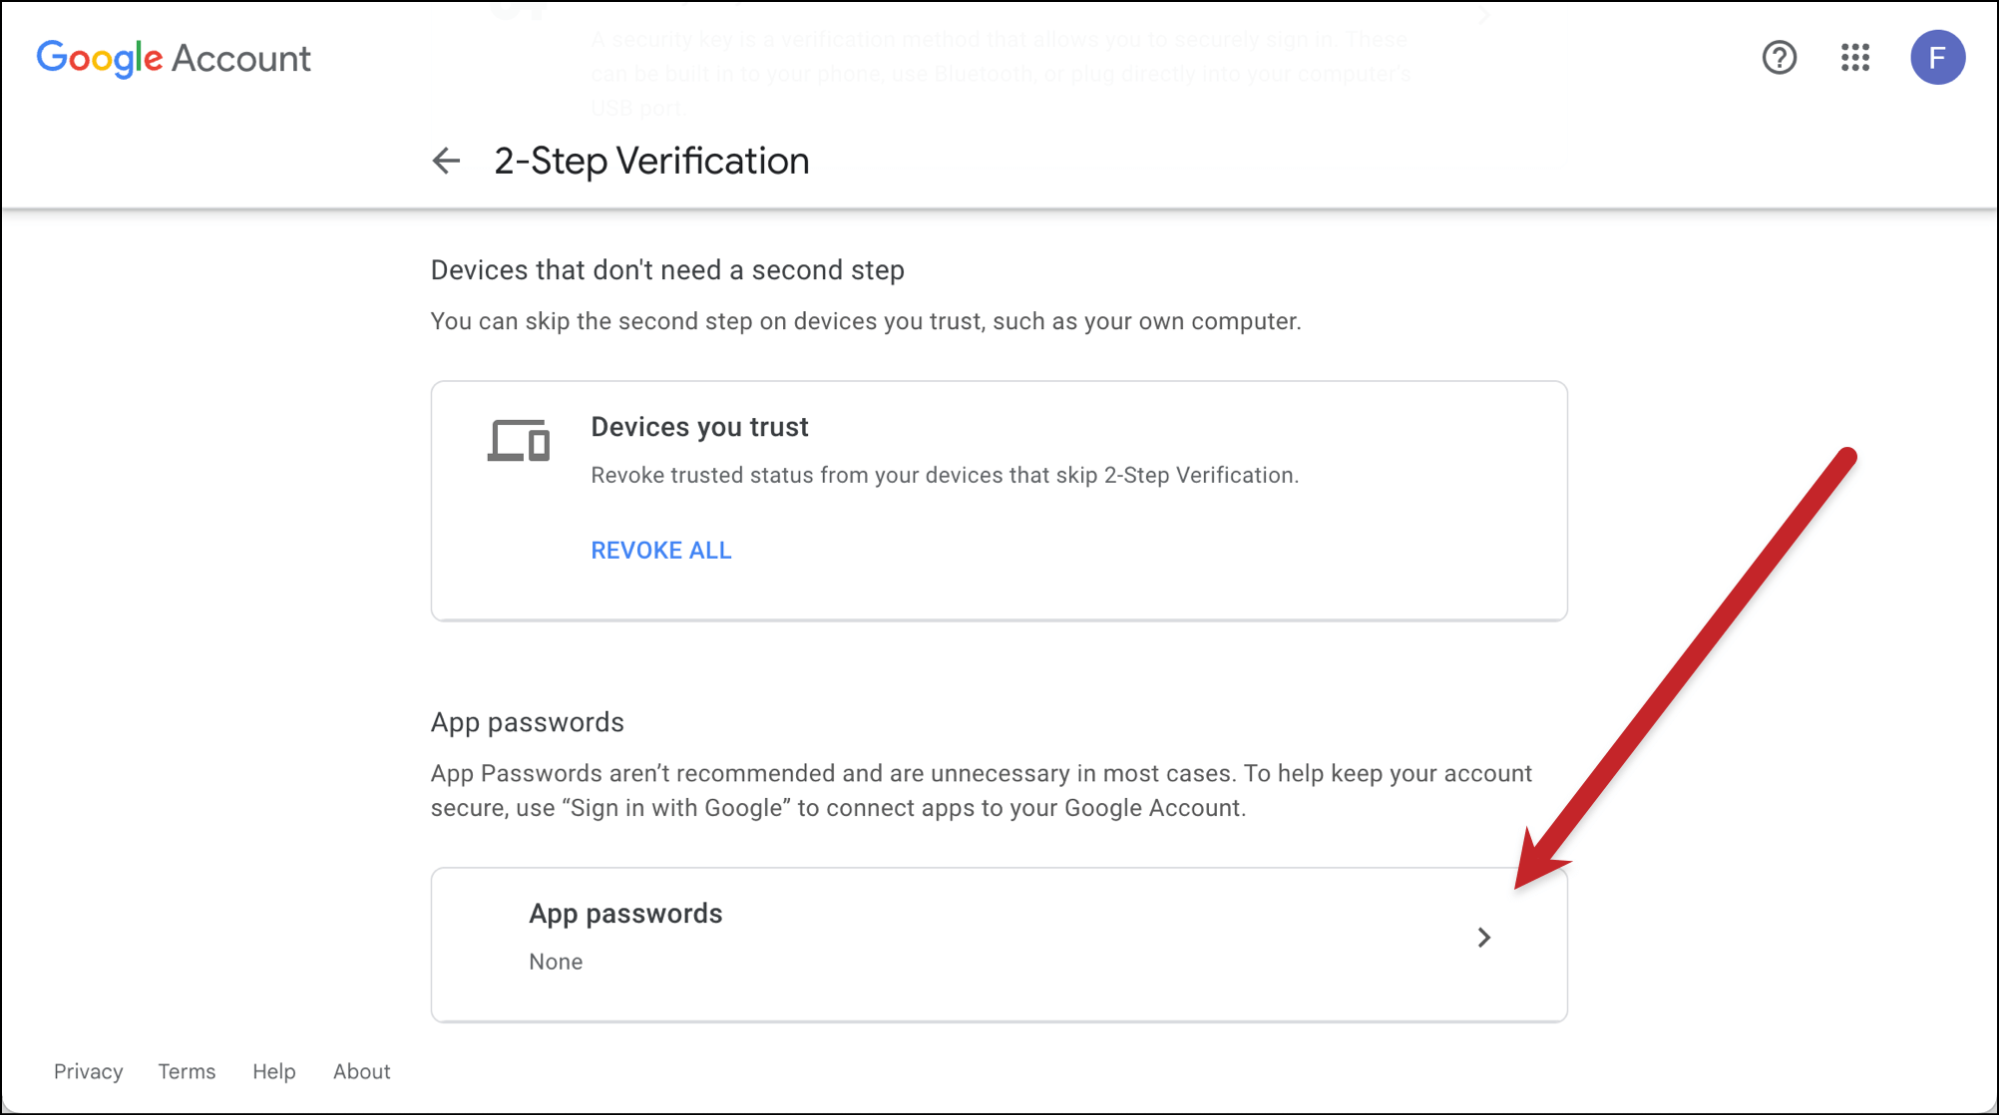 Go into the app passwords settings